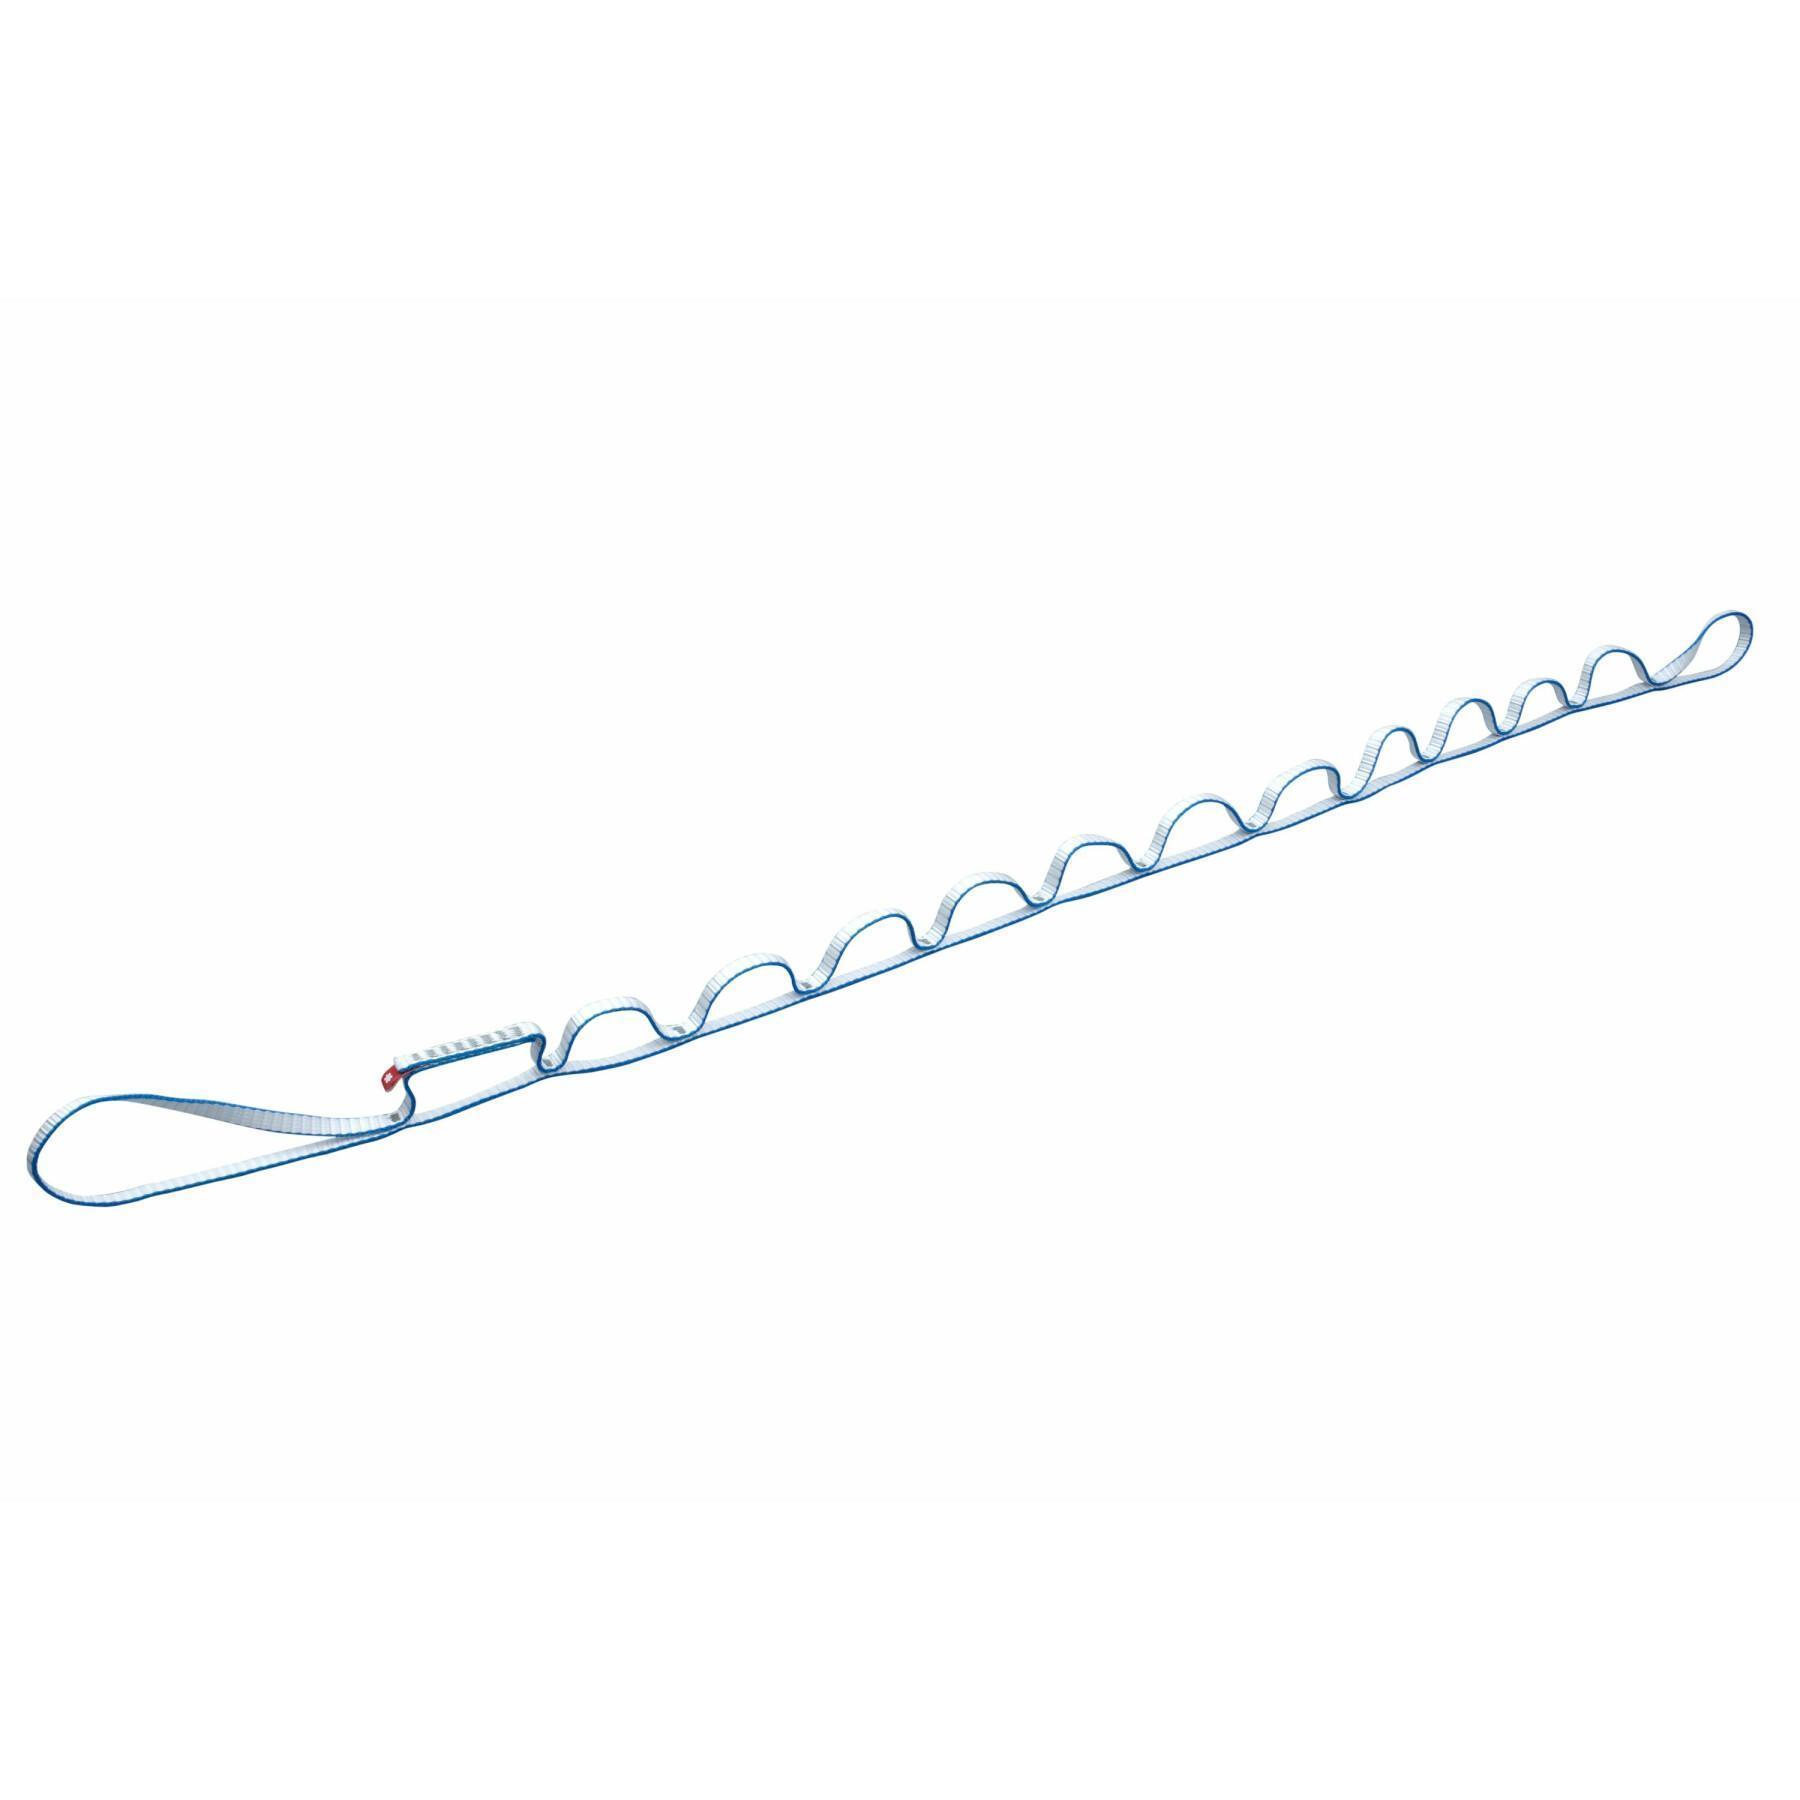 Daisy chain connection strap Ocun Dyn 11mm 135cm